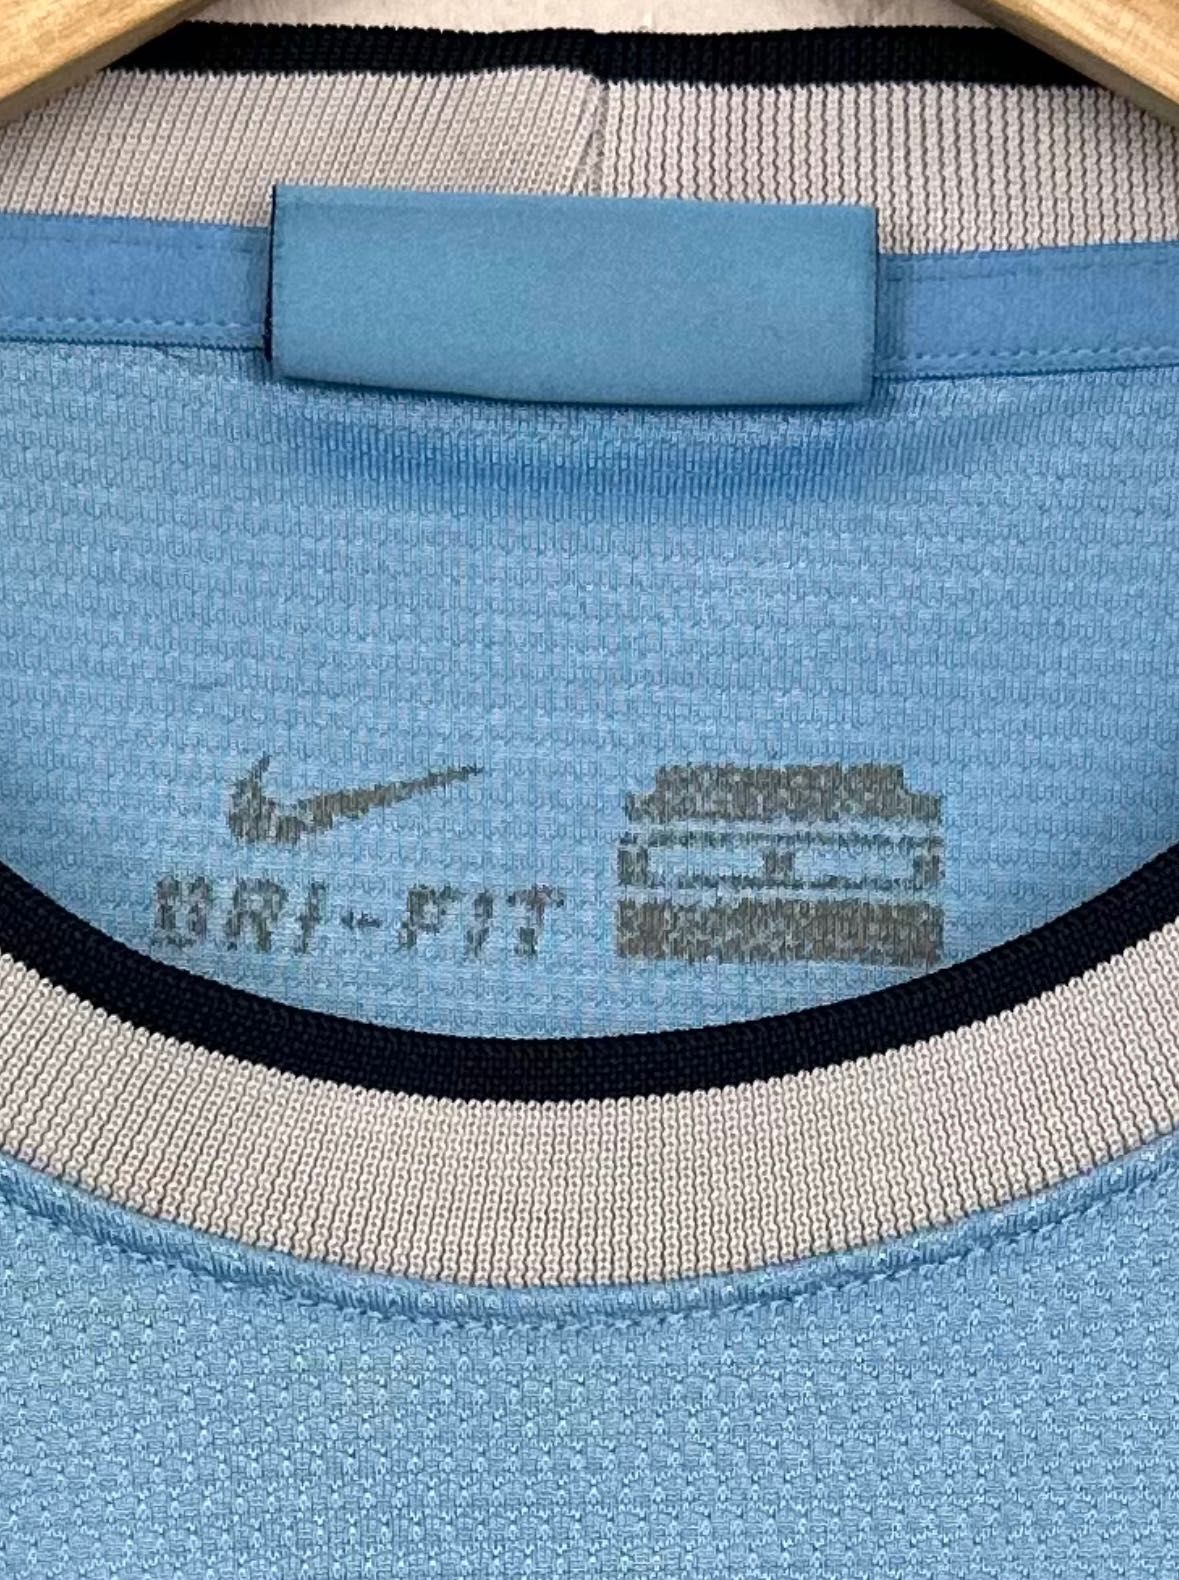 Koszulka piłkarska Nike Manchester City 2013/14 koszulka domowa